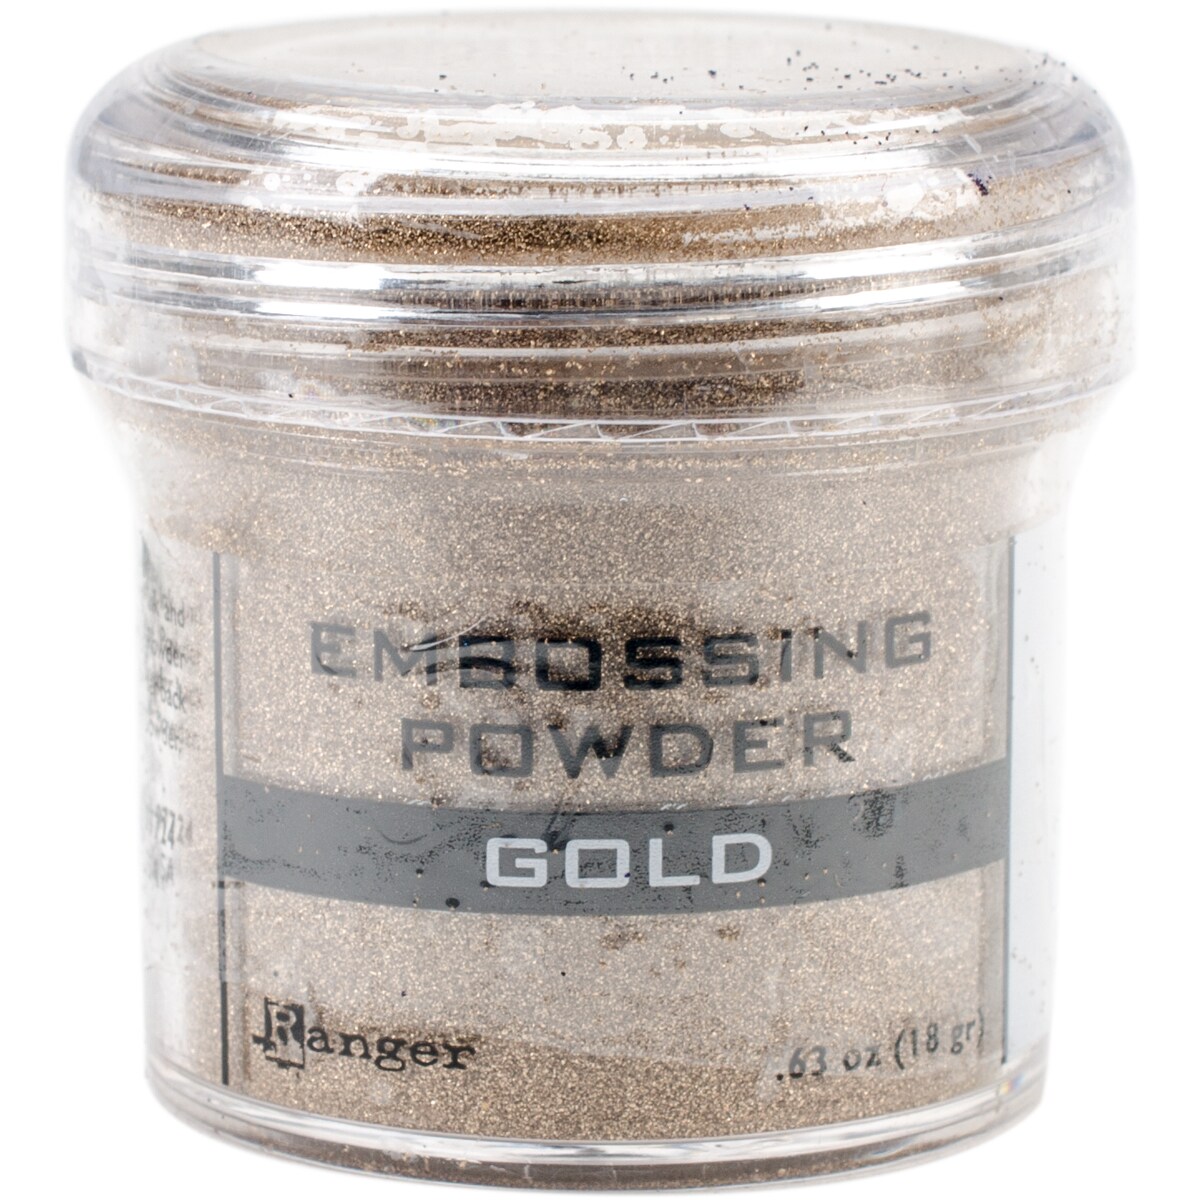 Ranger Embossing Powder-Gold